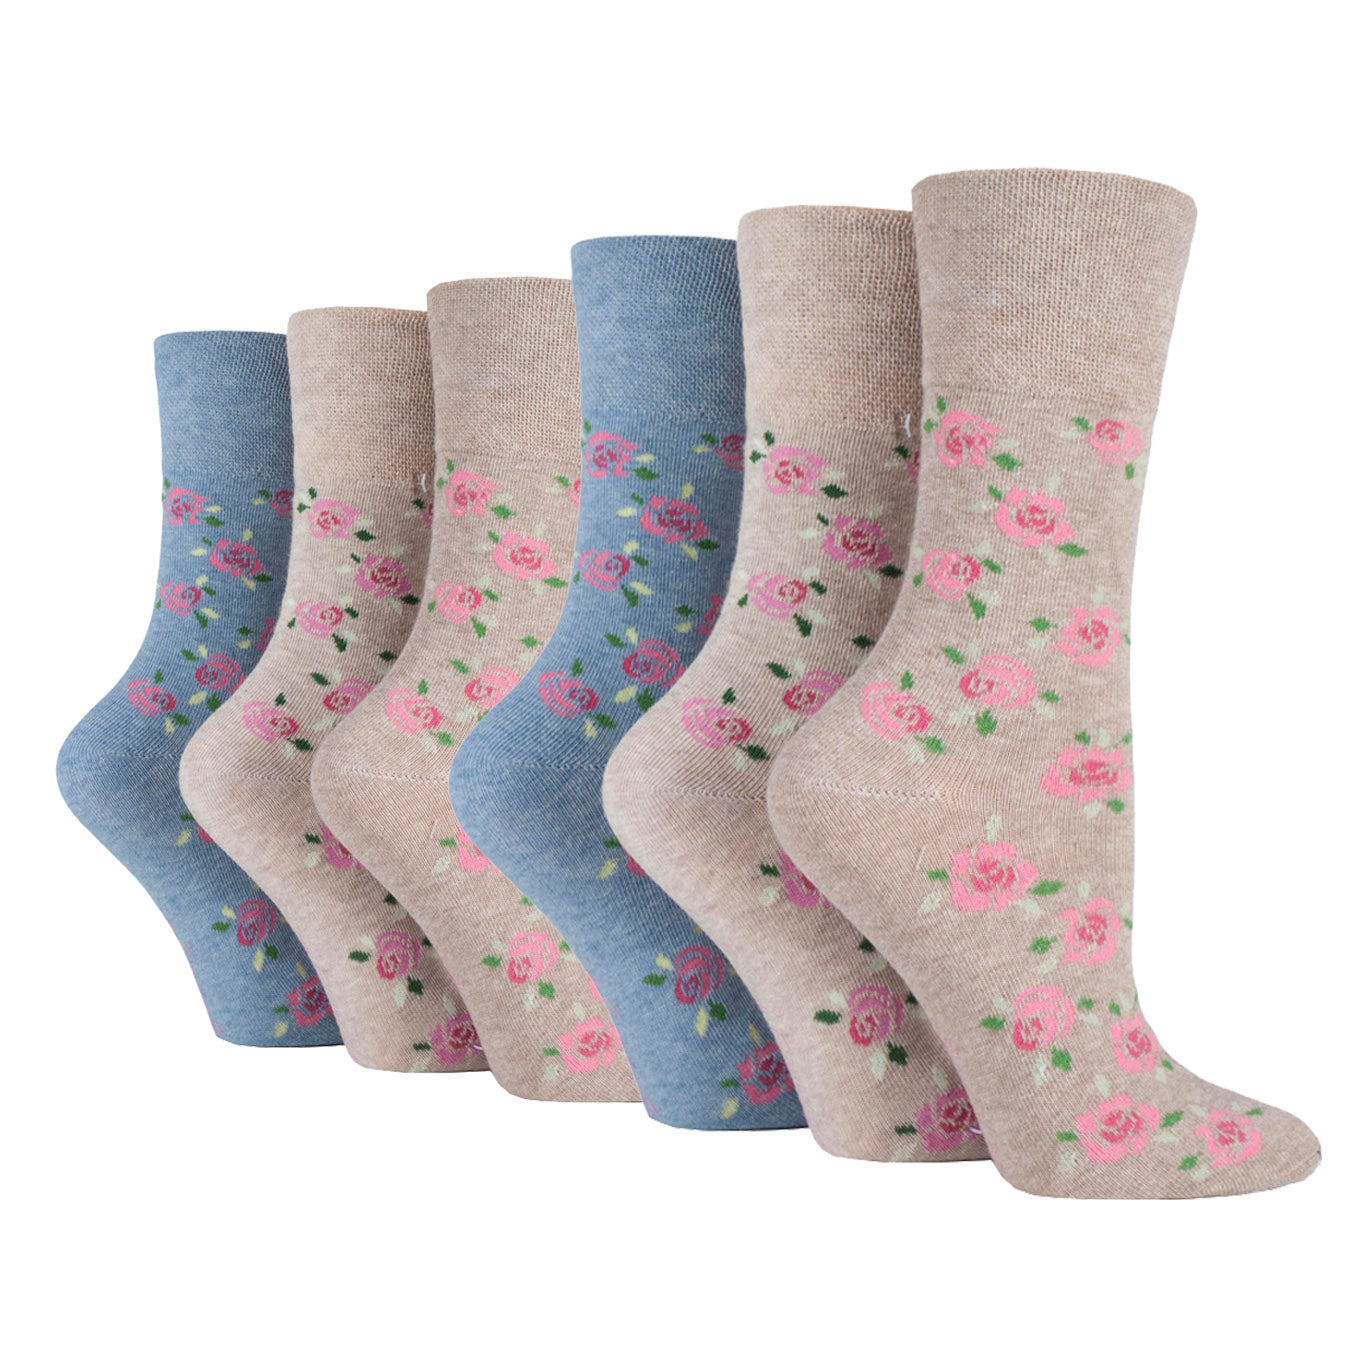 6 Pairs Ladies Gentle Grip Cotton Socks Blue/Neutral